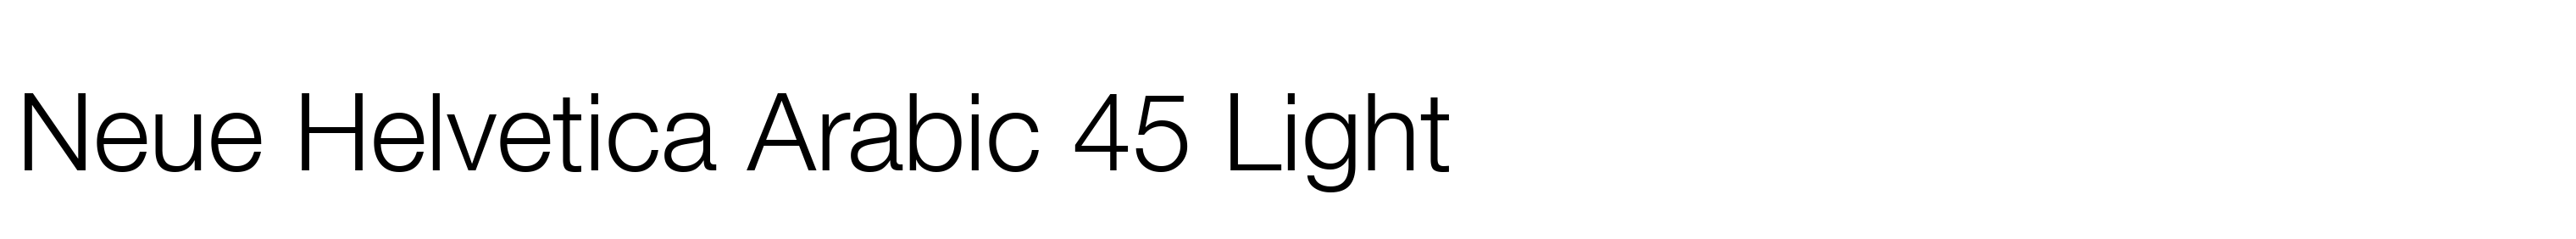 Neue Helvetica Arabic 45 Light